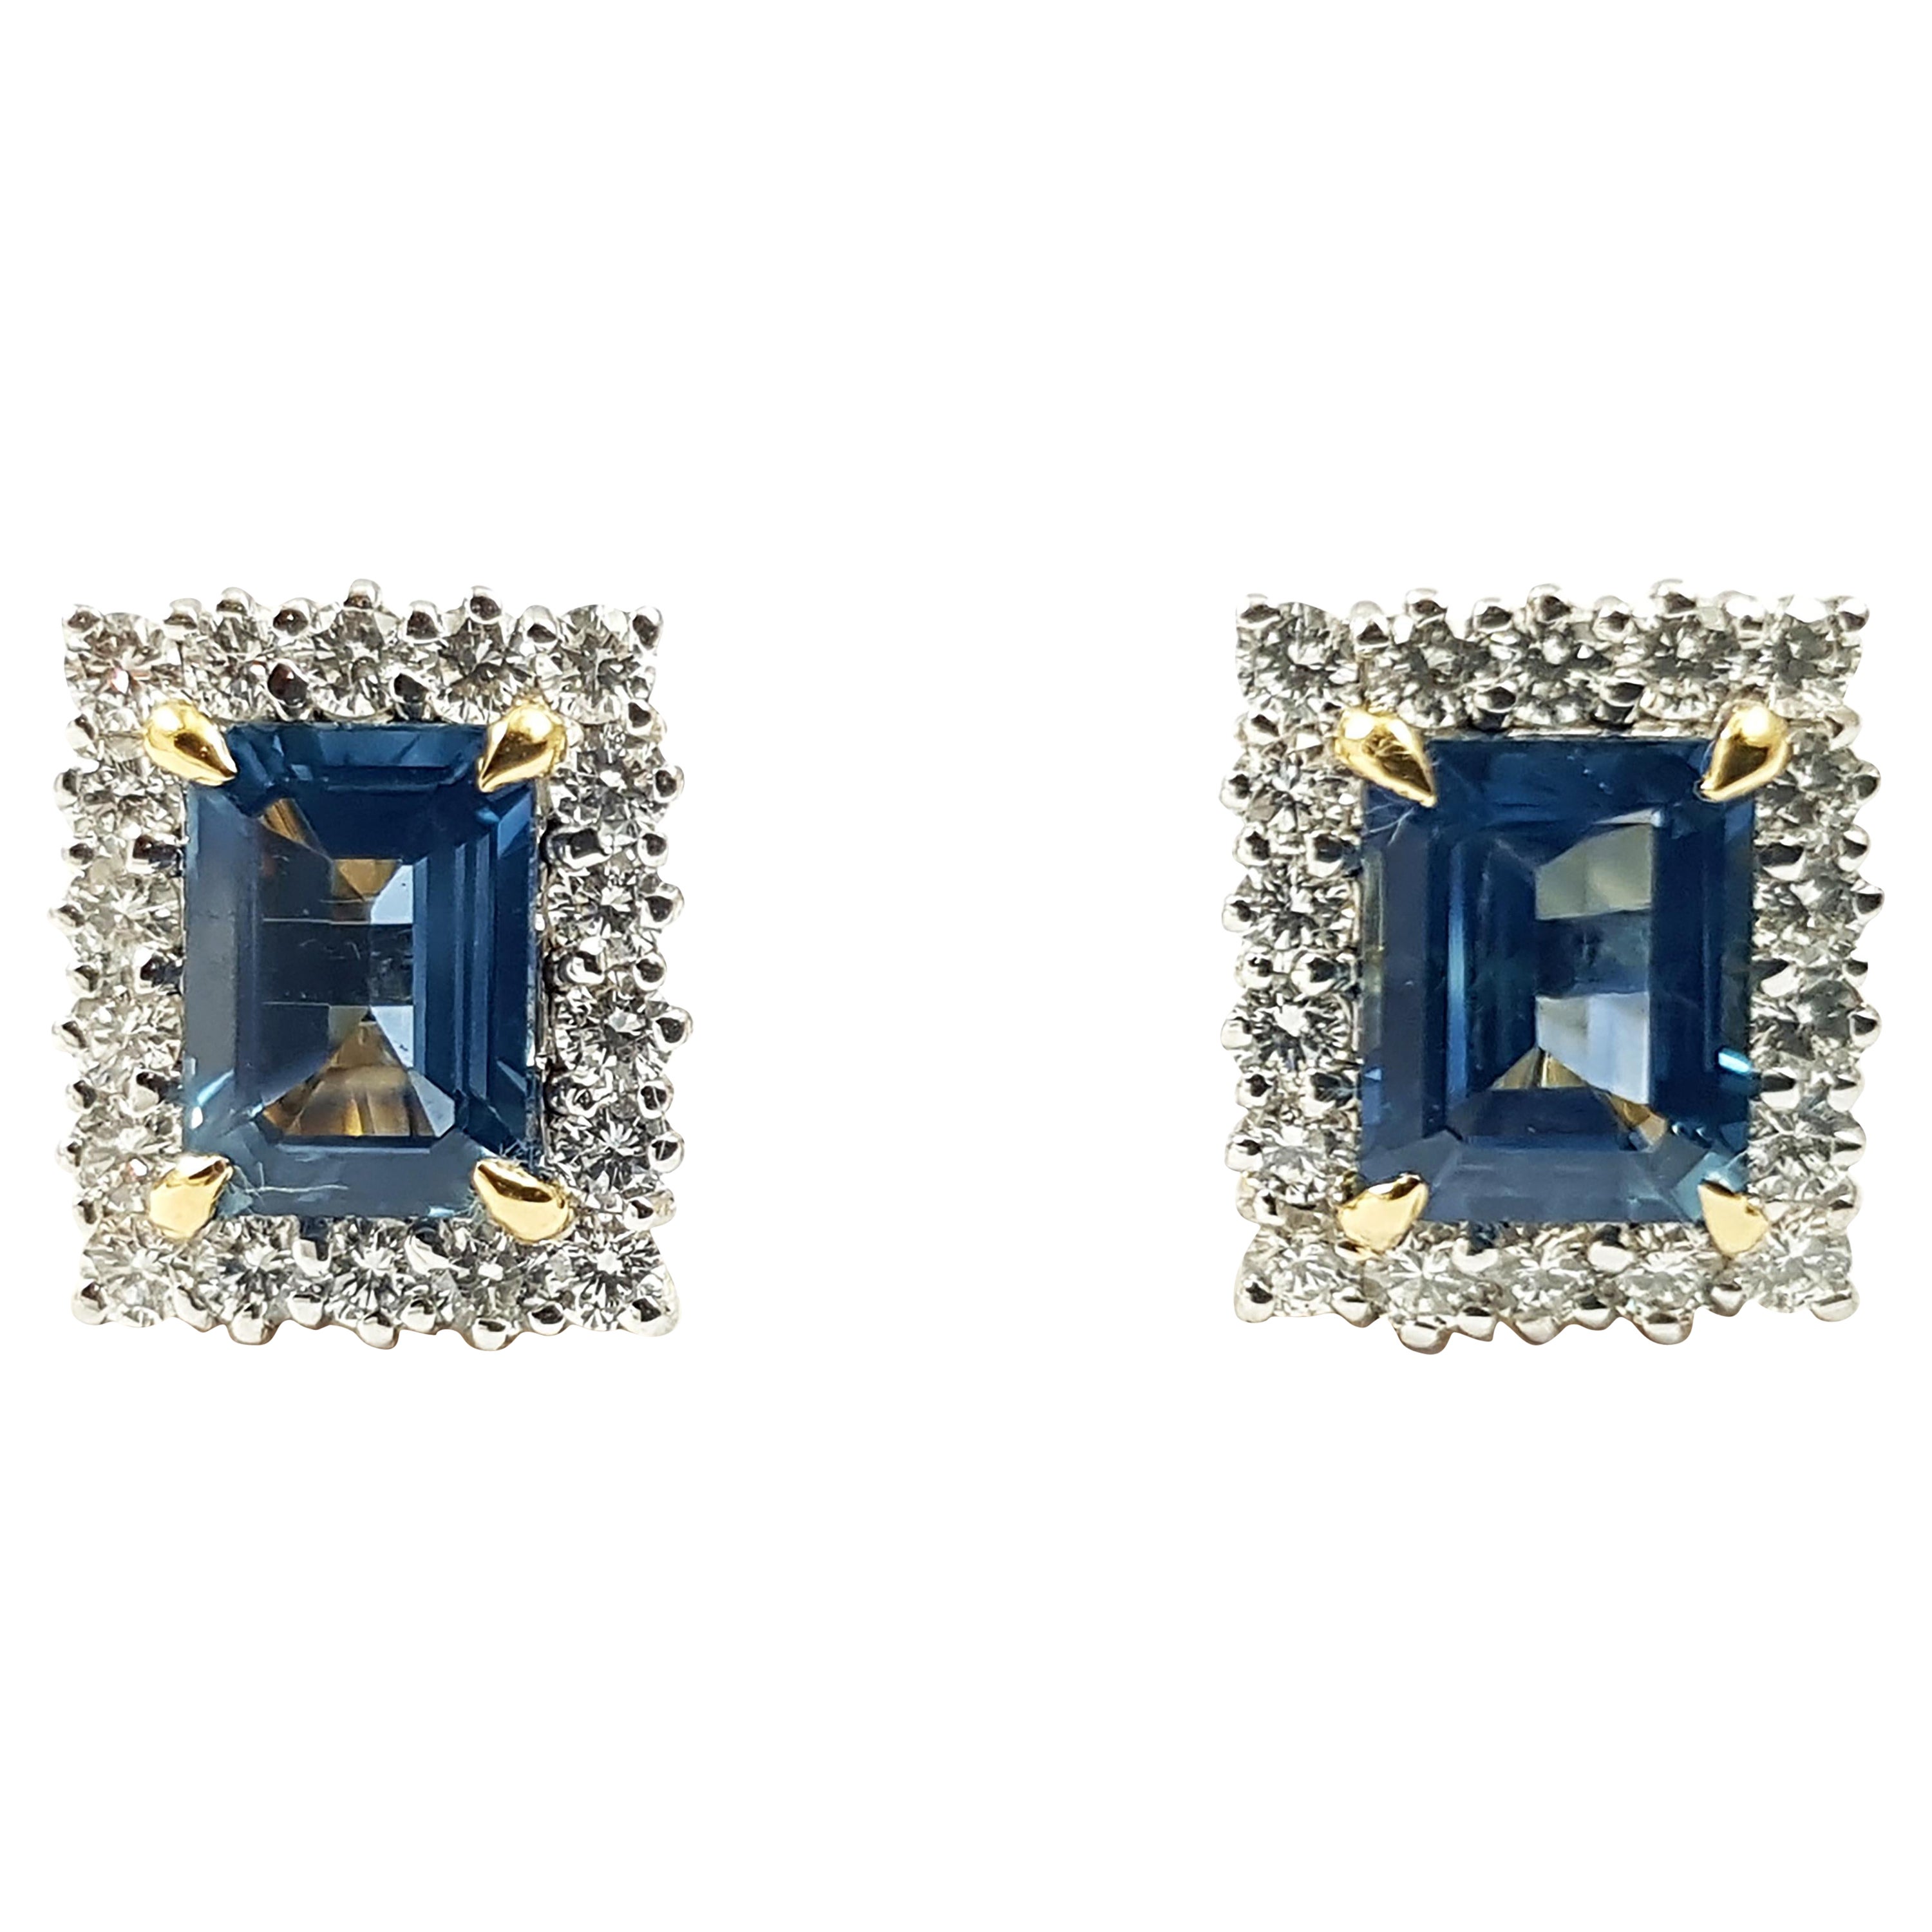 Emerald Cut Blue Sapphire with Diamond Earrings Set in 18 Karat Gold Settings